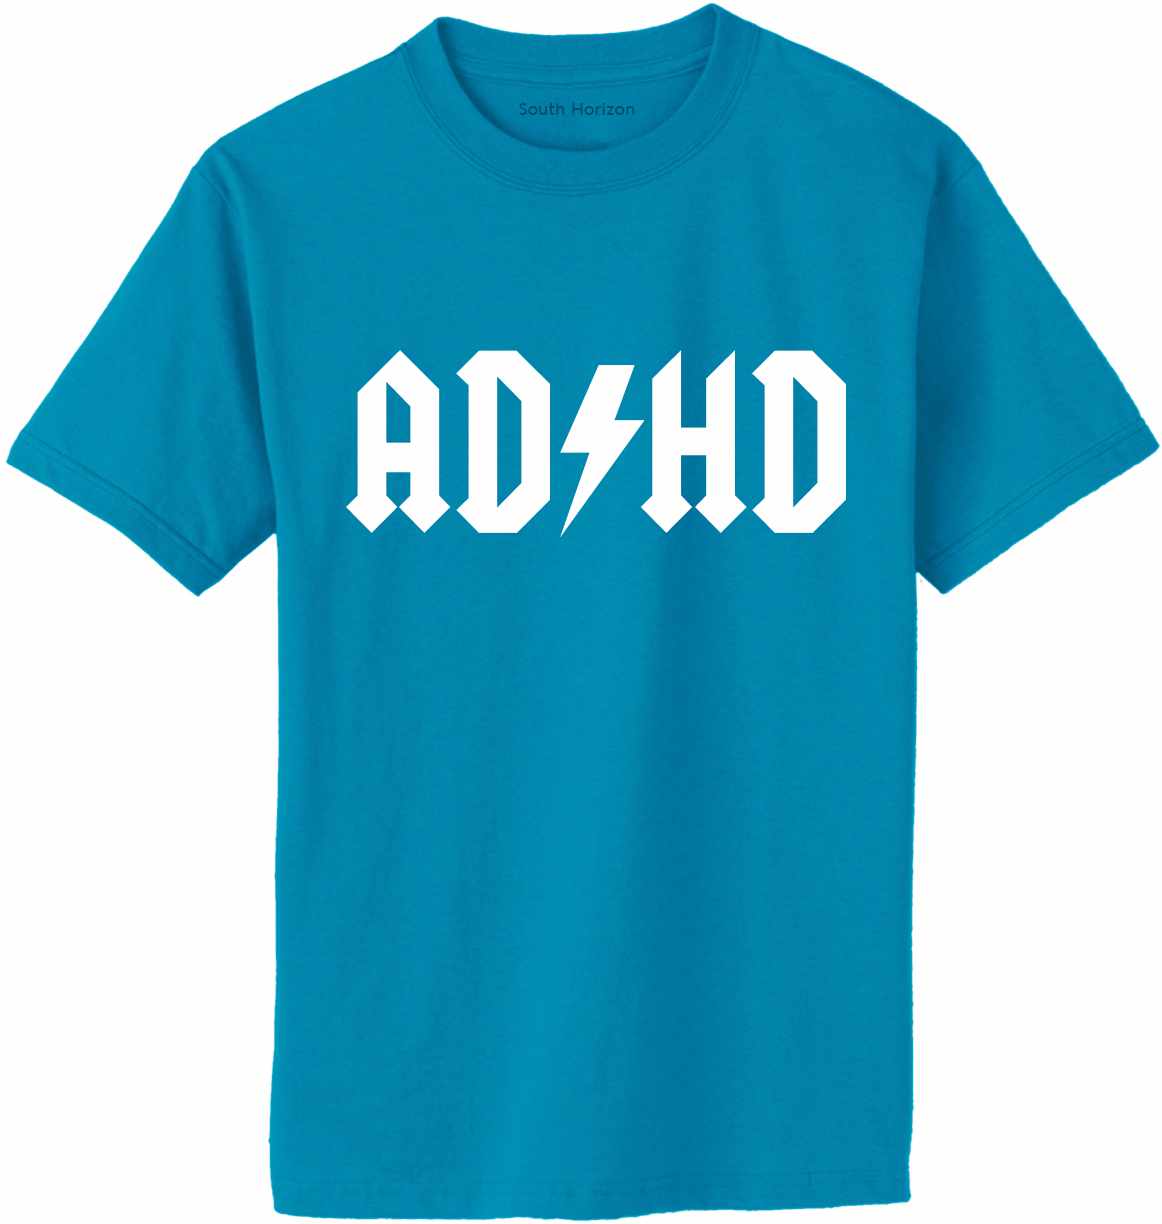 ADHD Adult T-Shirt